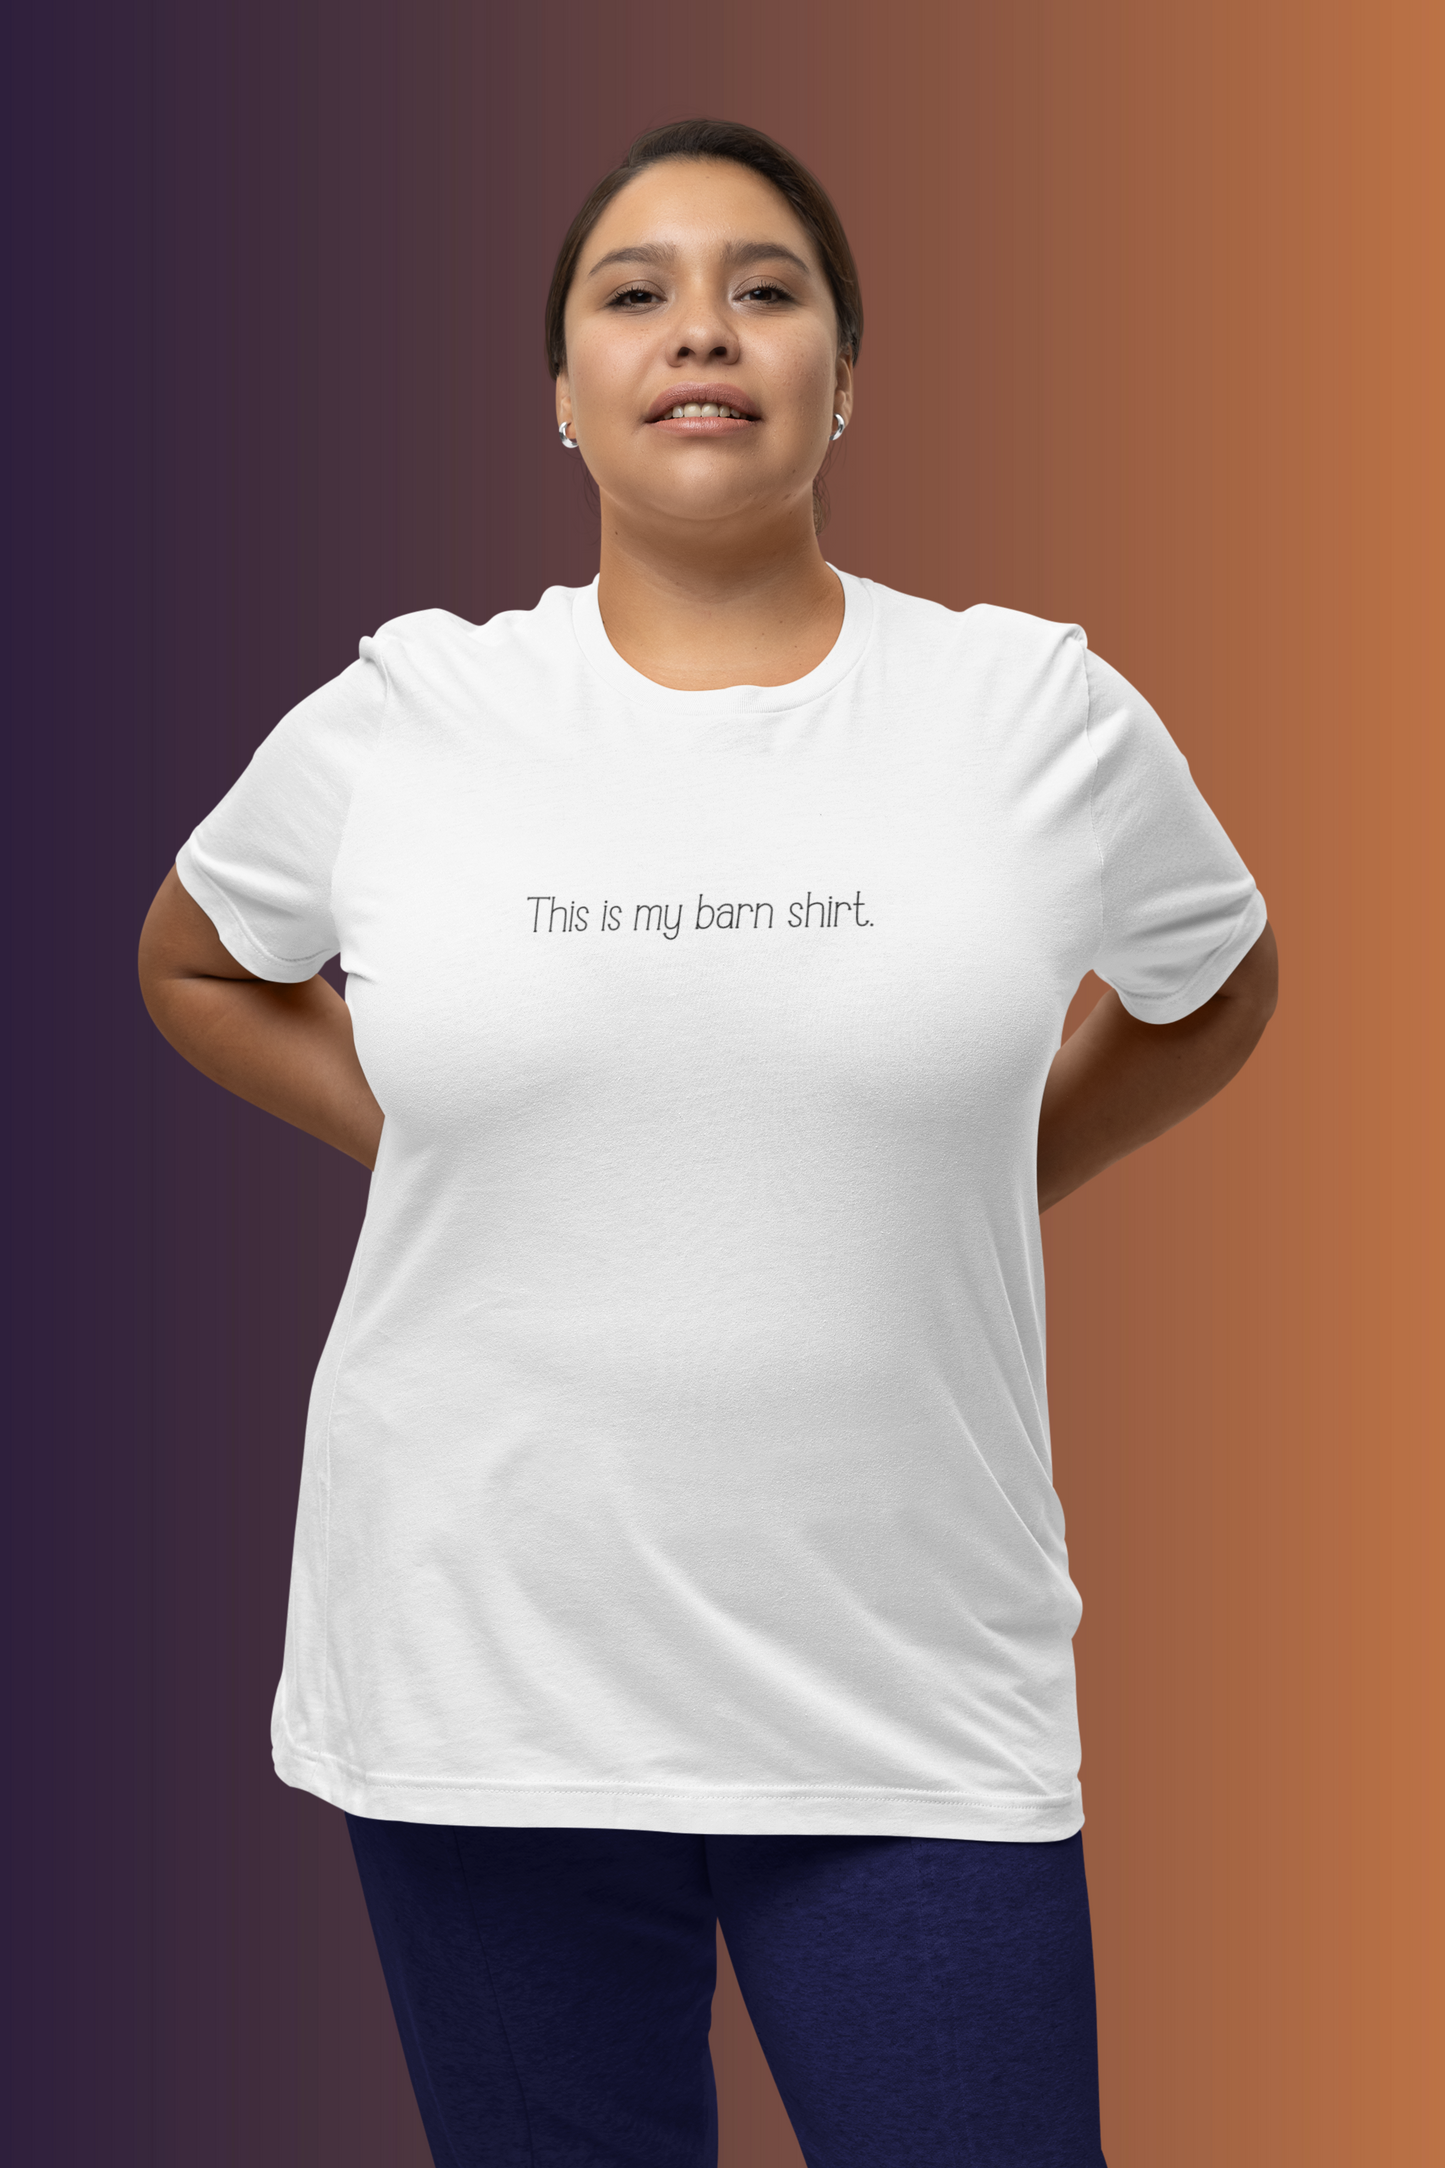 This Is My Barn Shirt T-shirt